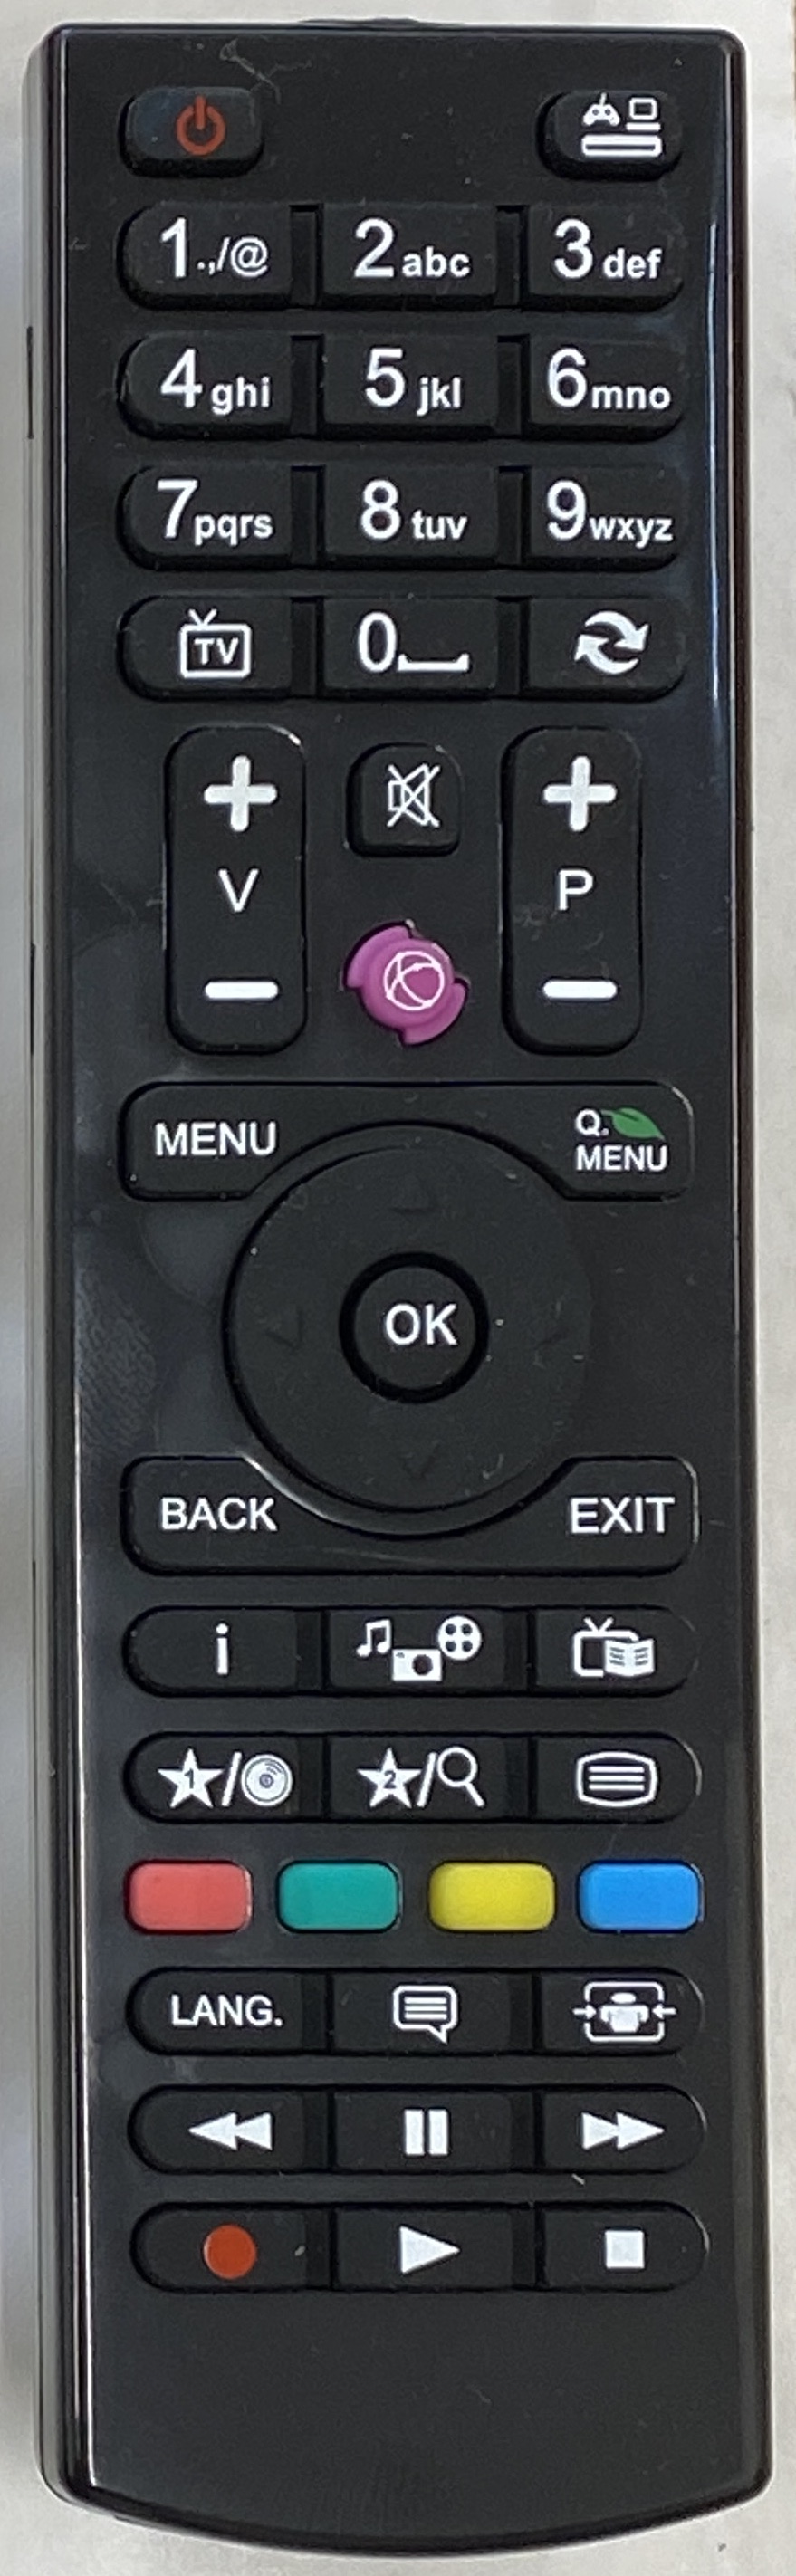 BUSH LED24970FHD Remote Control Original